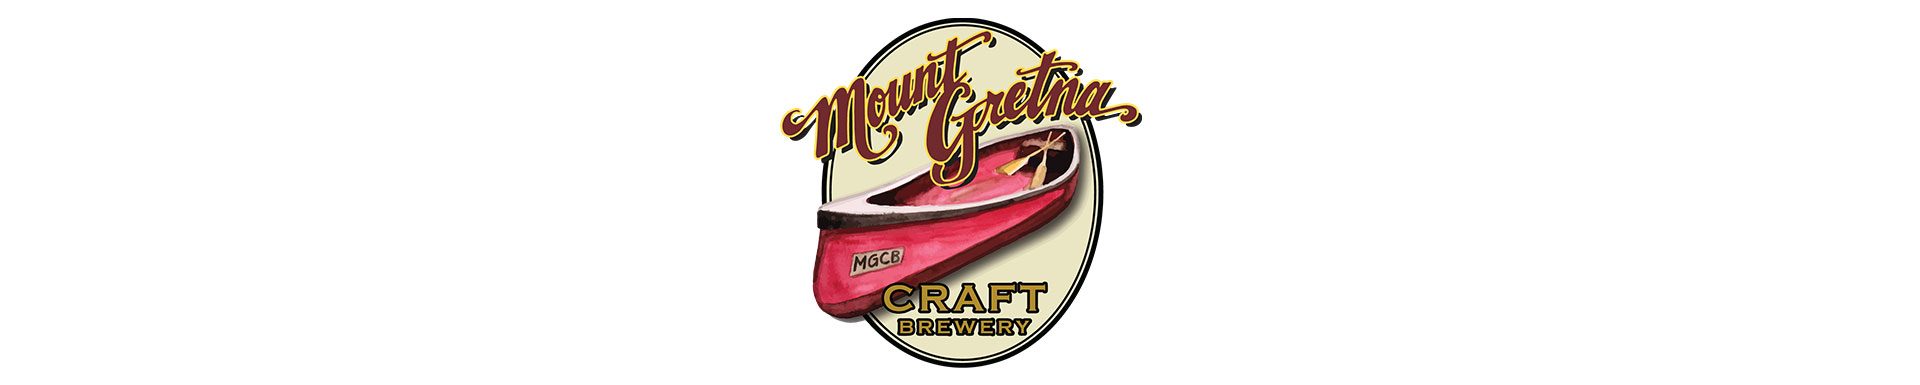 Mount Gretna Craft Brewery